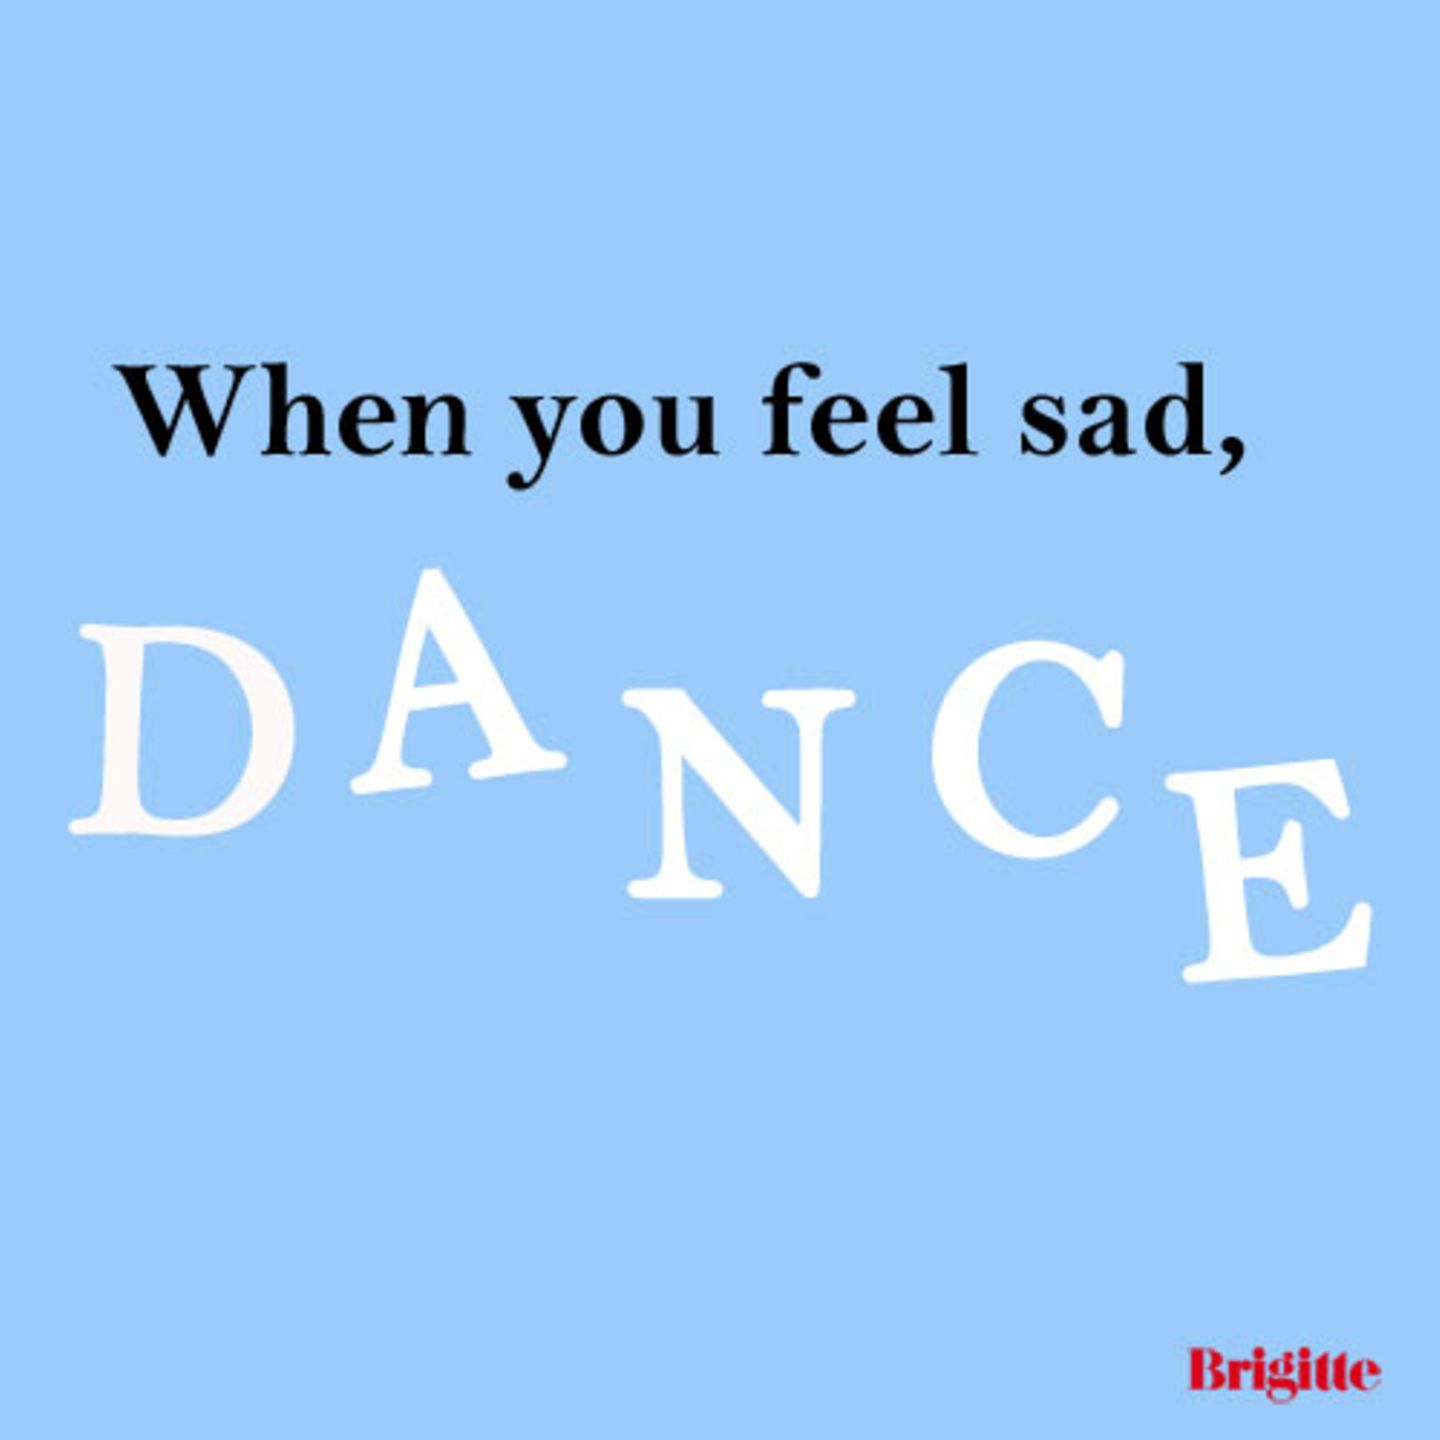 When you feel sad, dance